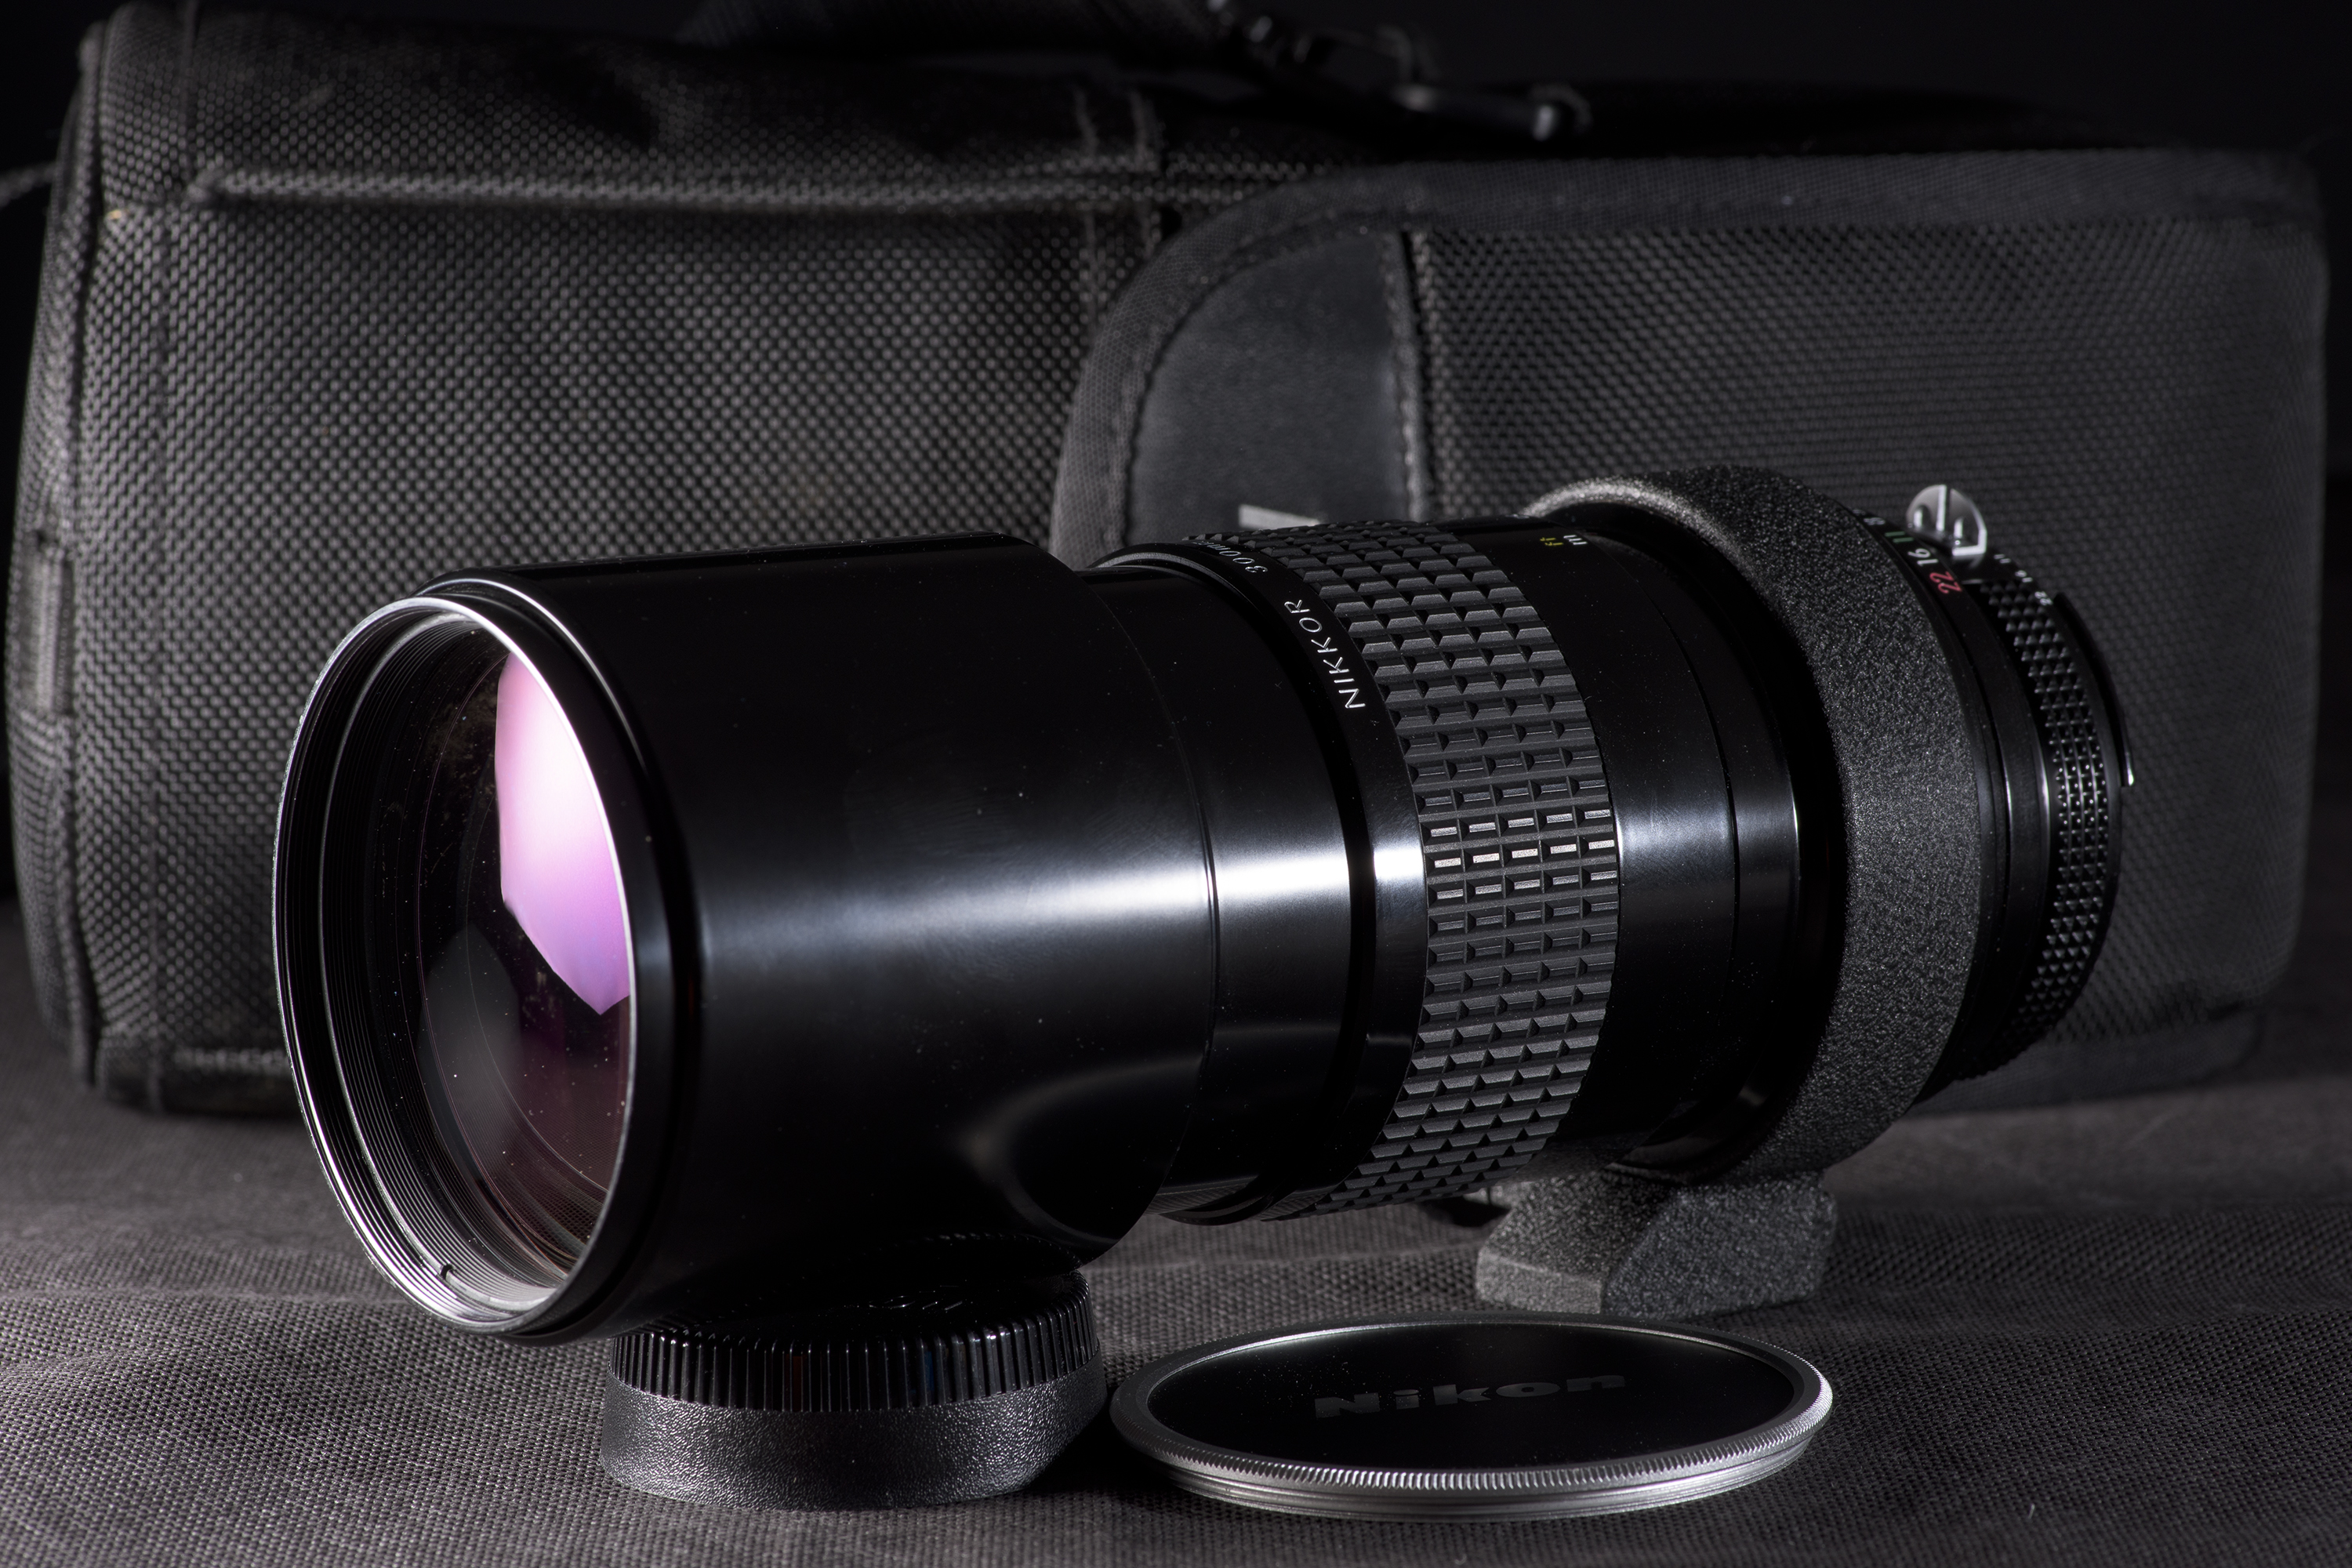 Nikkor 300mm f/4.5 AI lens with the Nikon D810 | Steve James' Blog